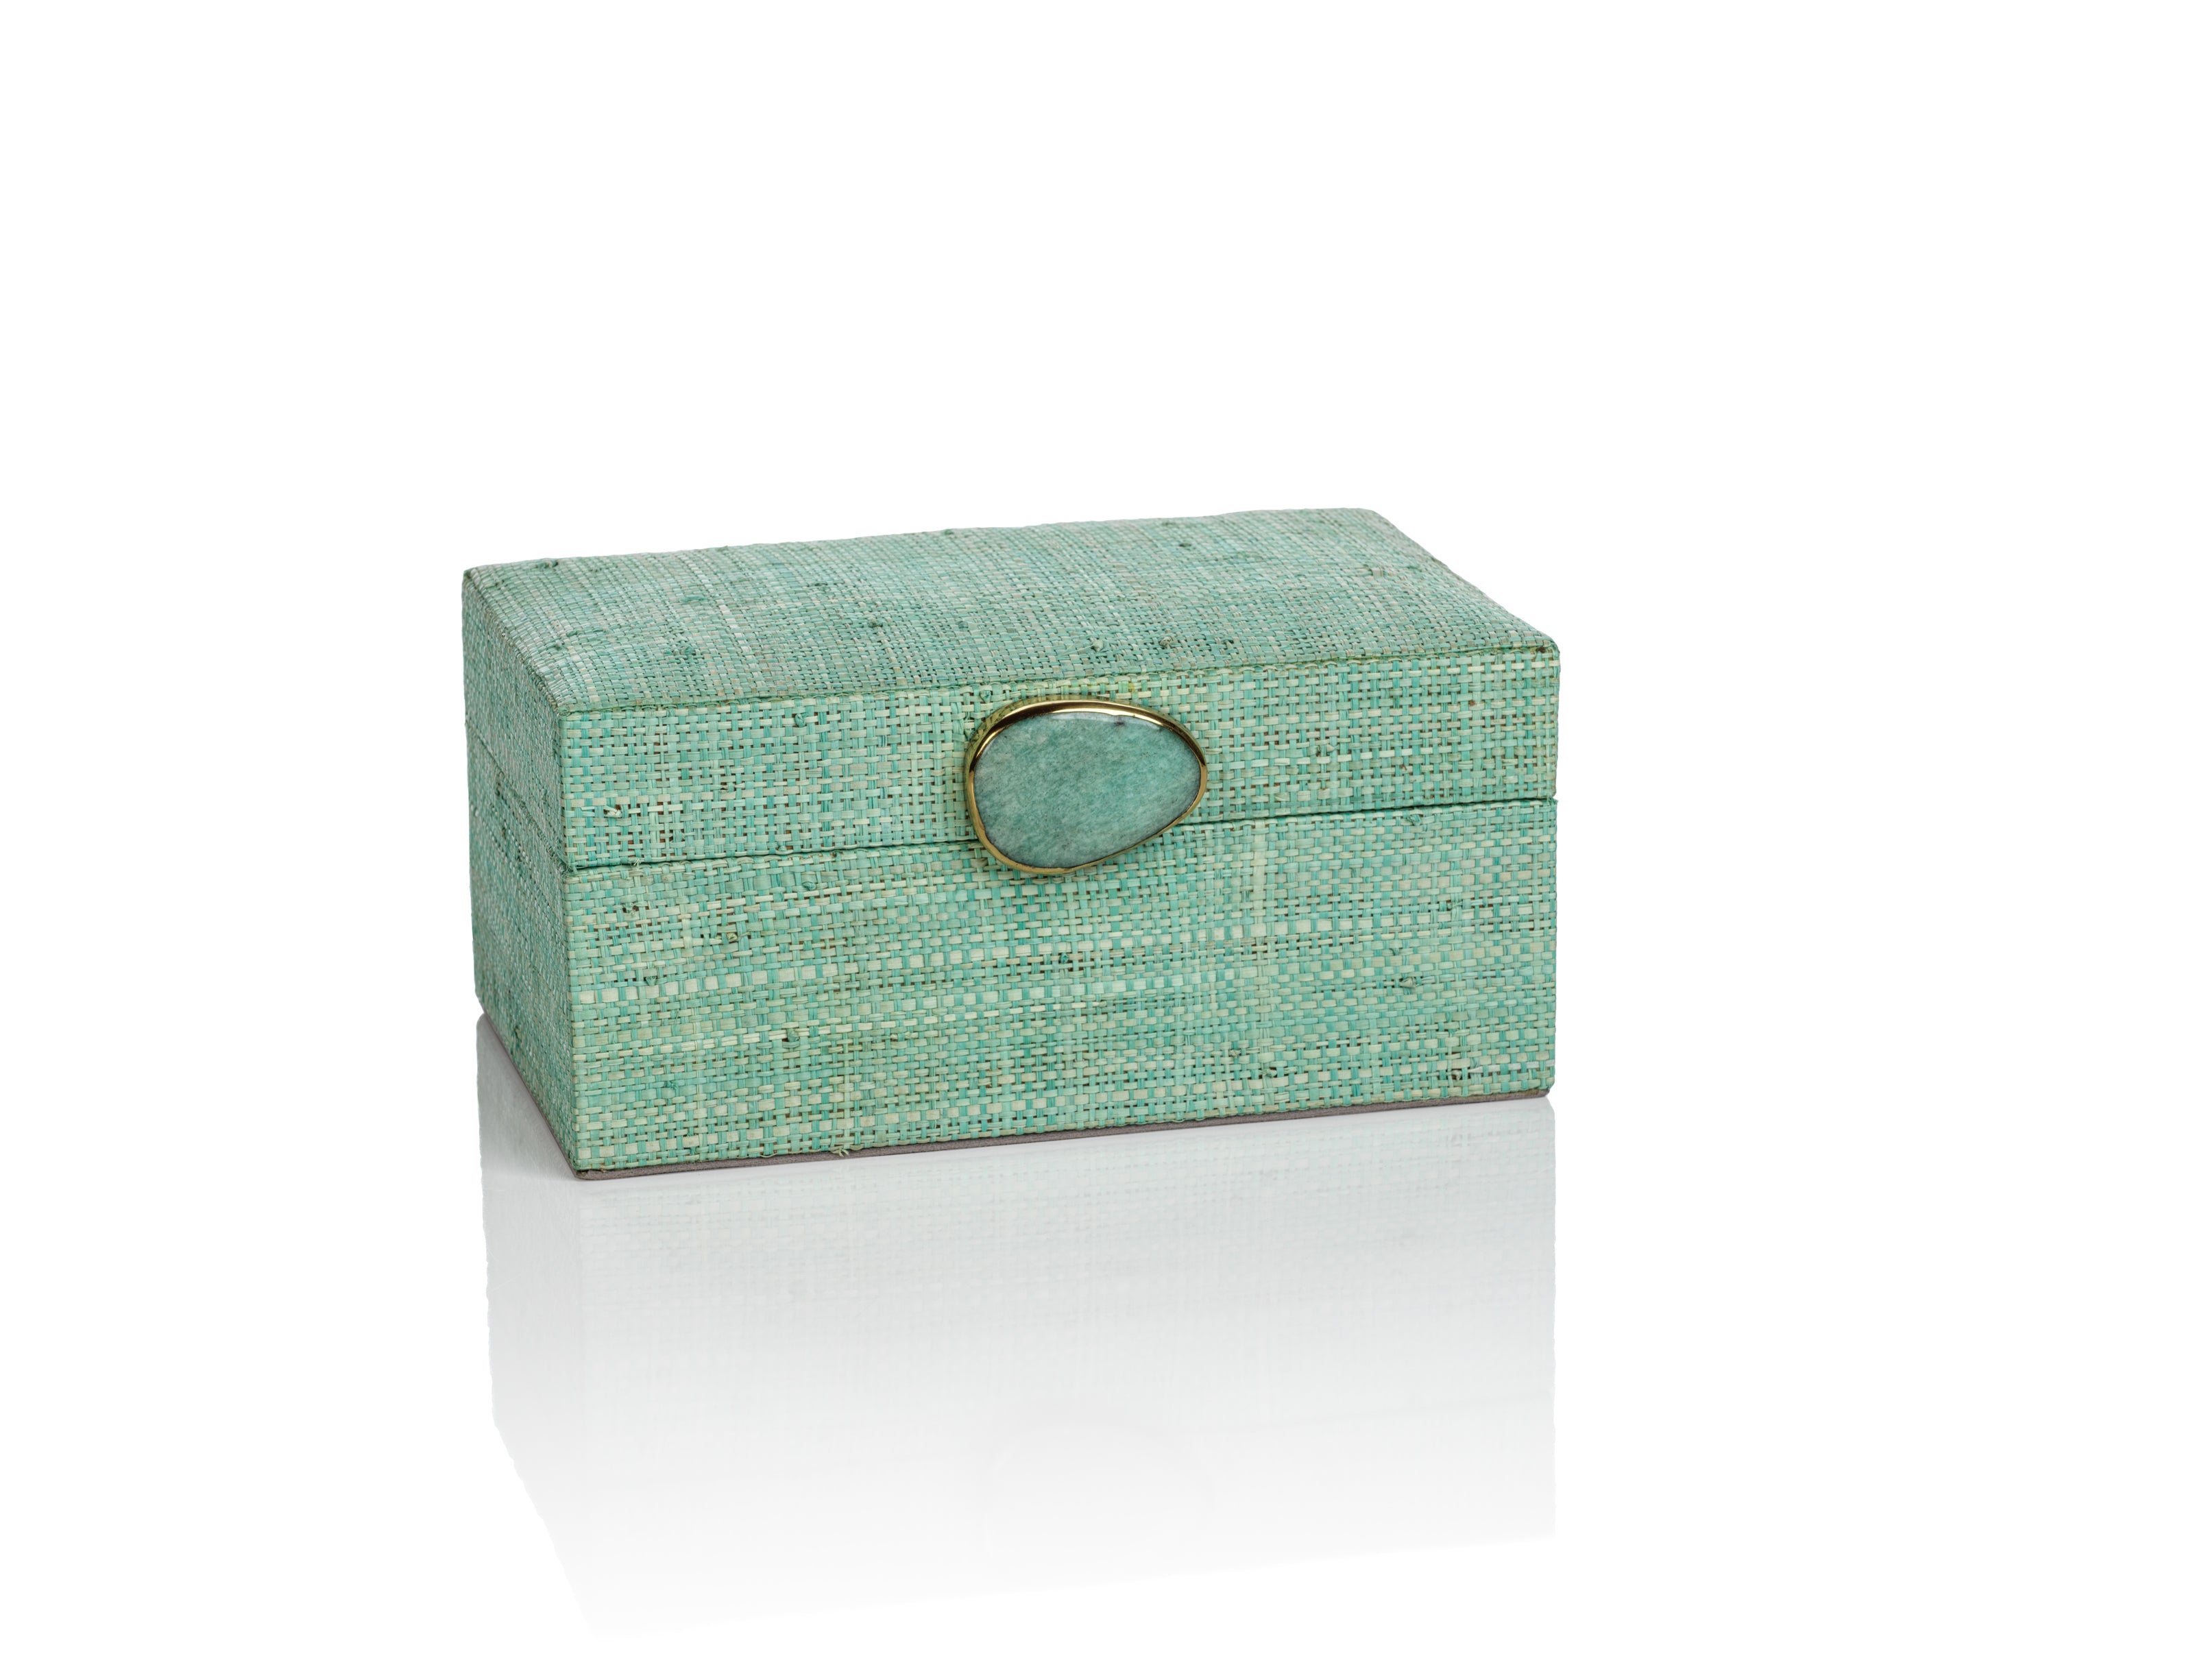 Raffia Palm Box with Stone Accent - Jade - CARLYLE AVENUE